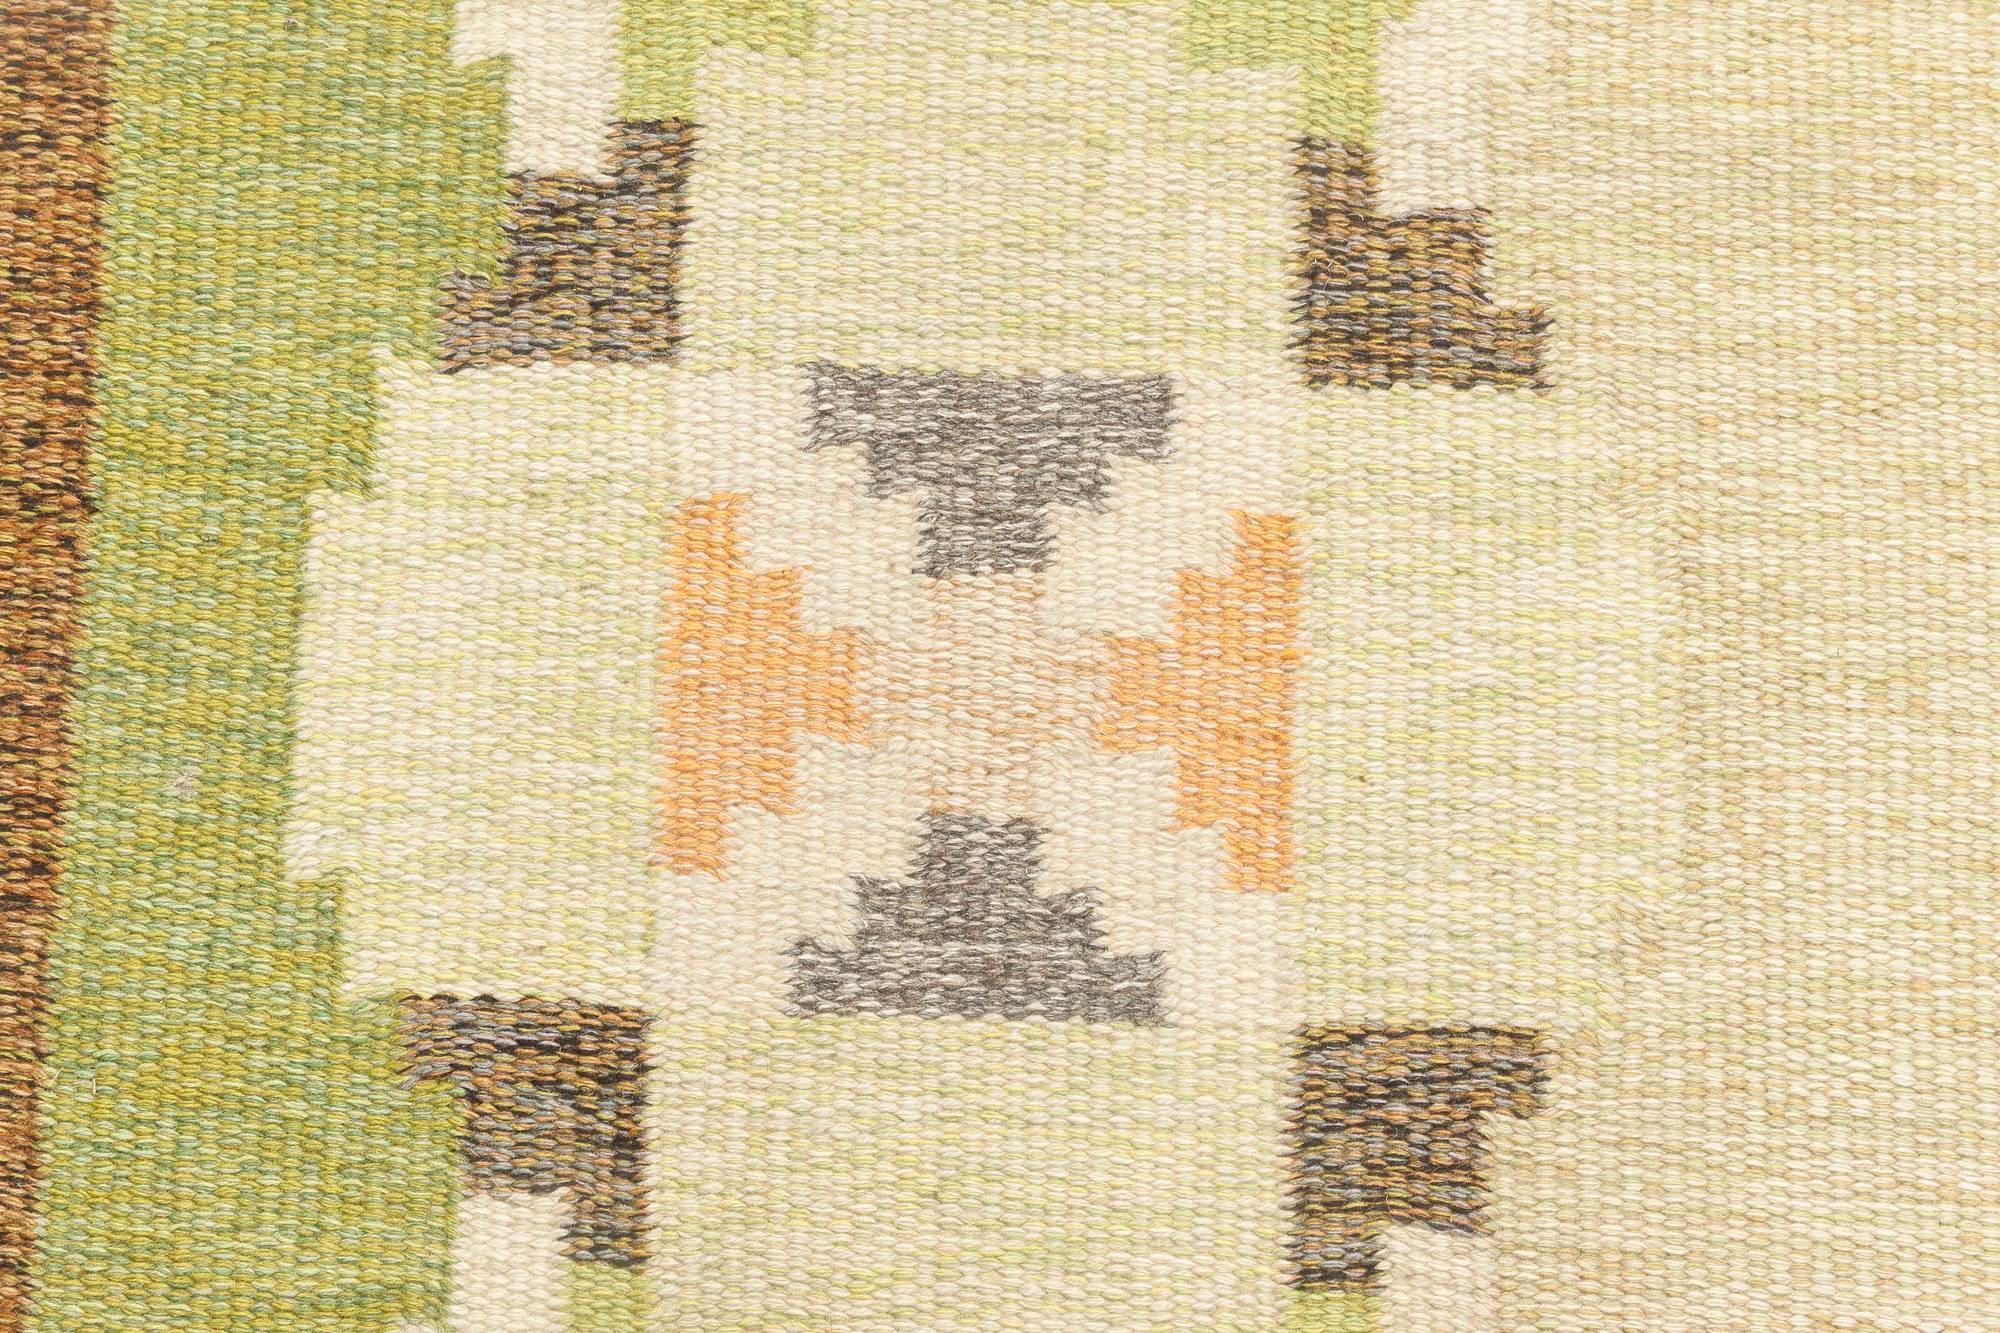 Vintage Swedish Green, Brown Flat-Weave Wool Rug Signed by Ingegerd Silow
Size: 6'4